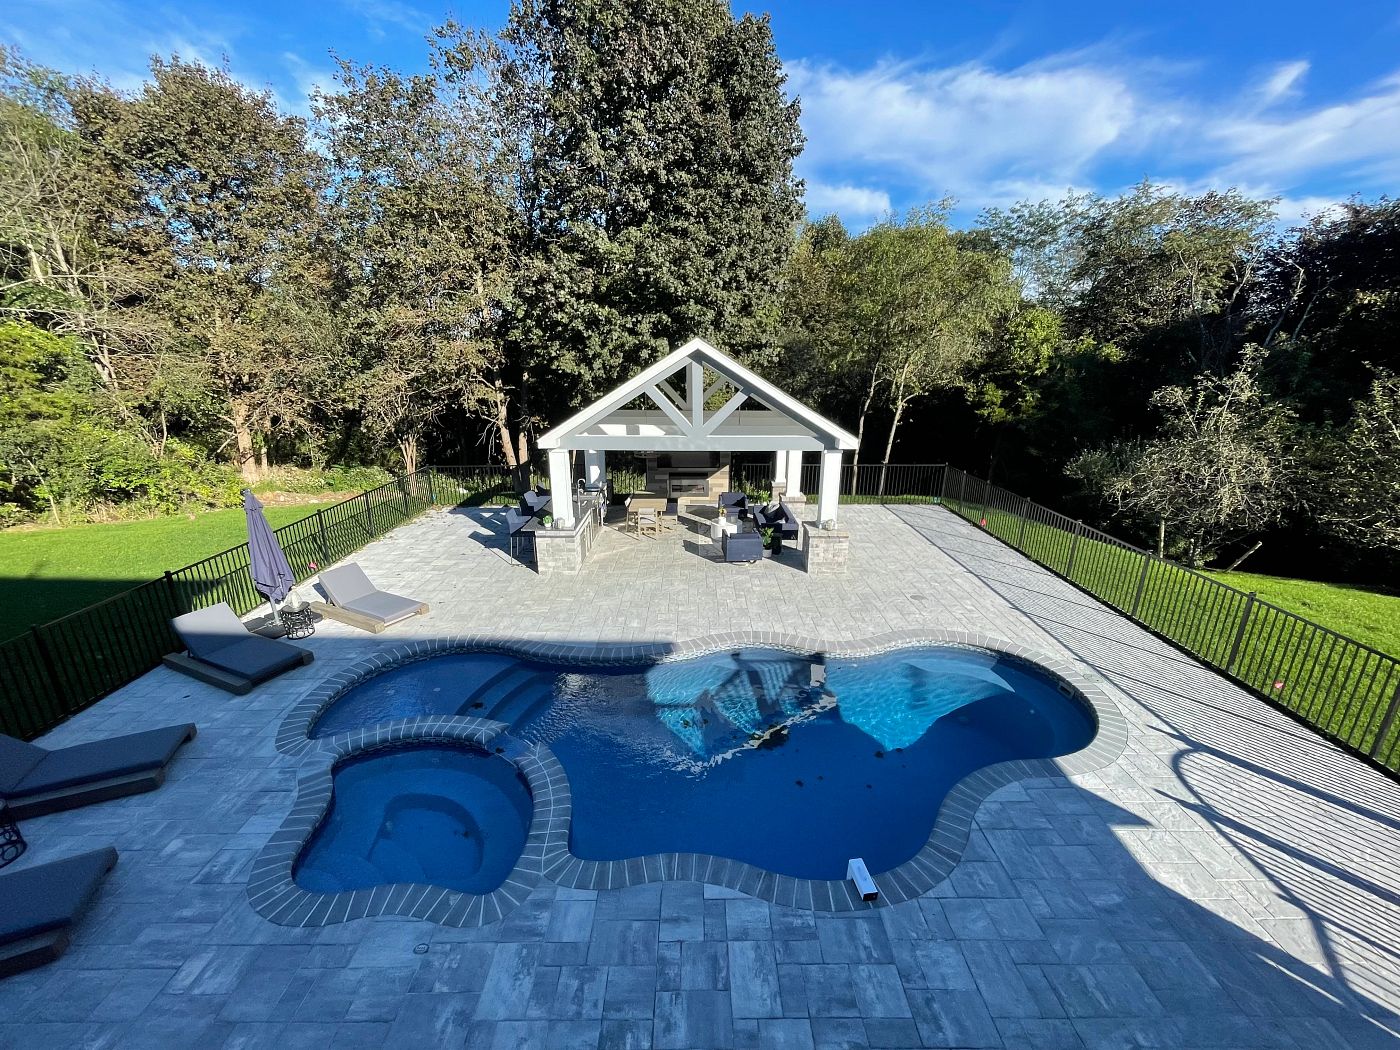 large fiberglass pool in fenced backyard with a gazebo